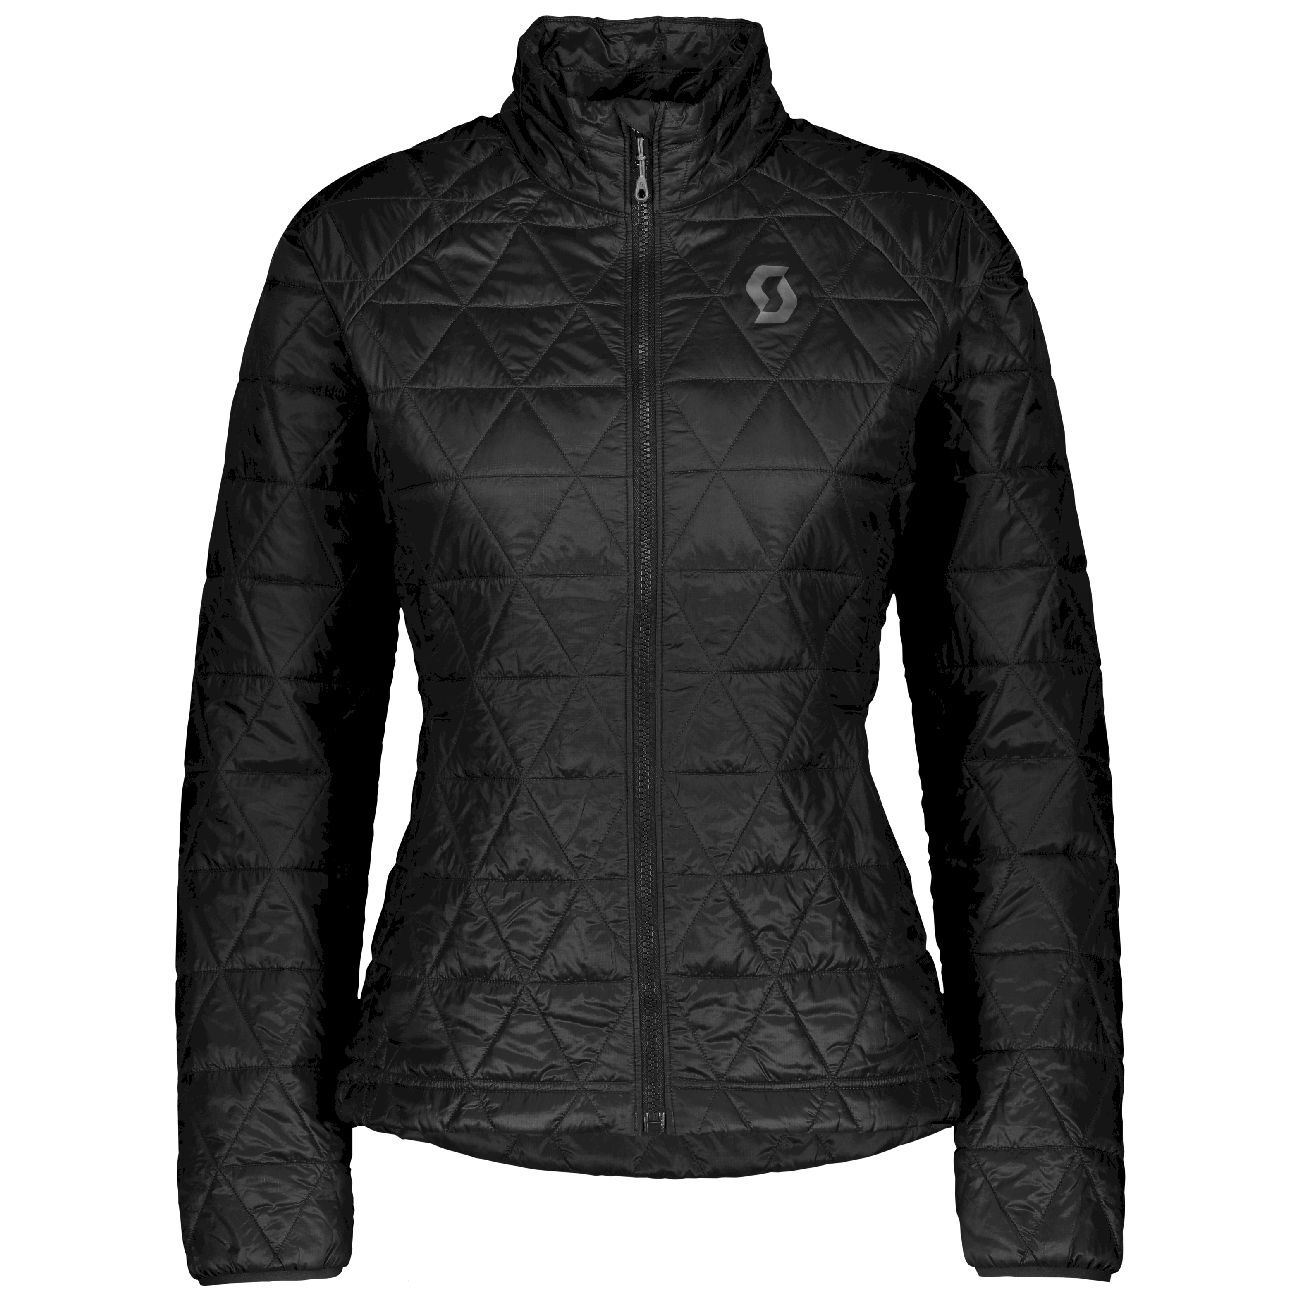 Scott Insuloft Superlight PL - Synthetic jacket - Women's